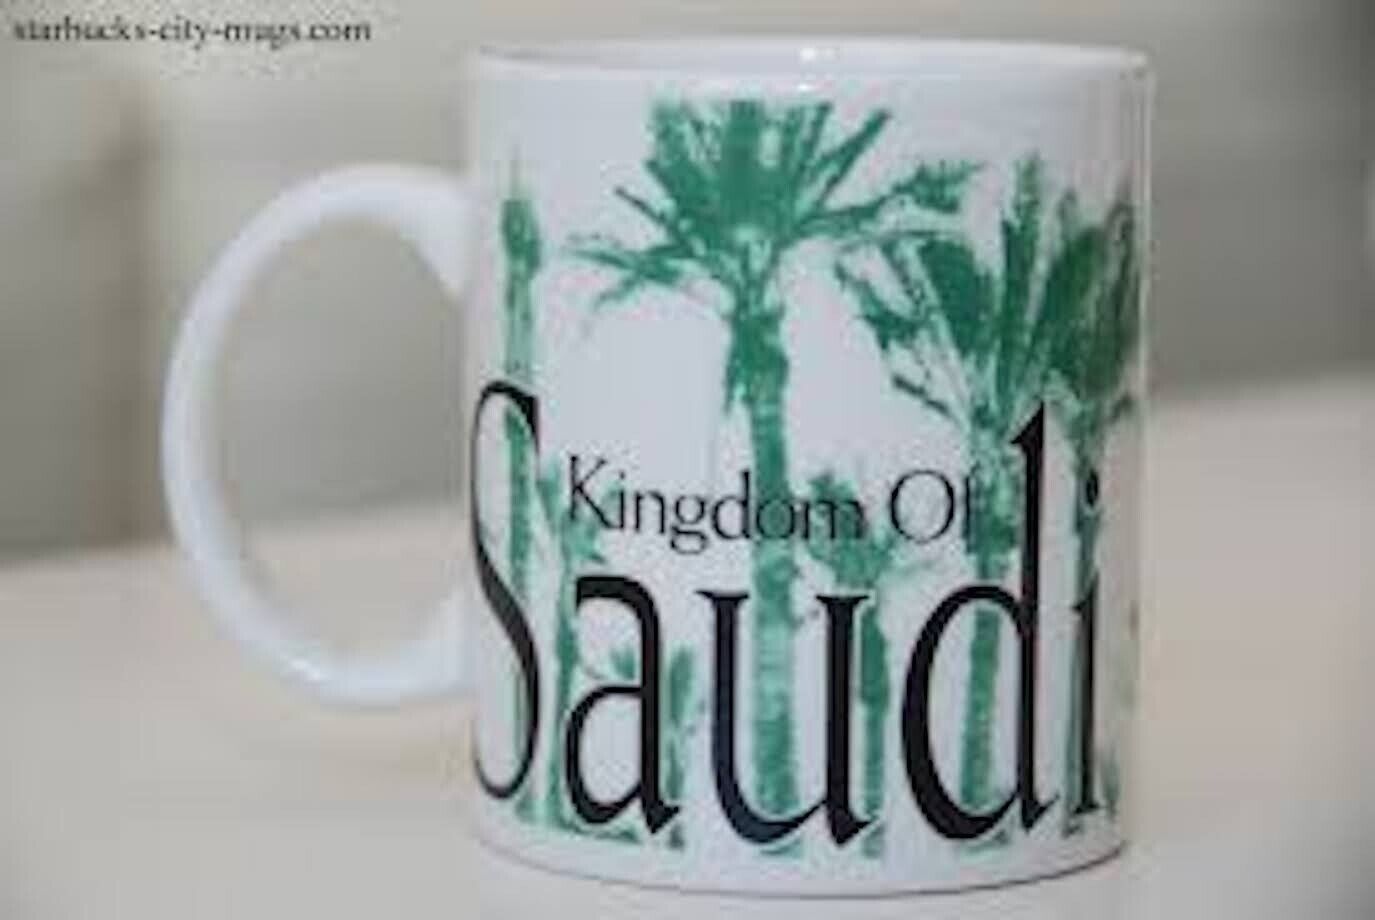 Starbucks Kingdom of Saudi Arabia City Mug Collectors Series